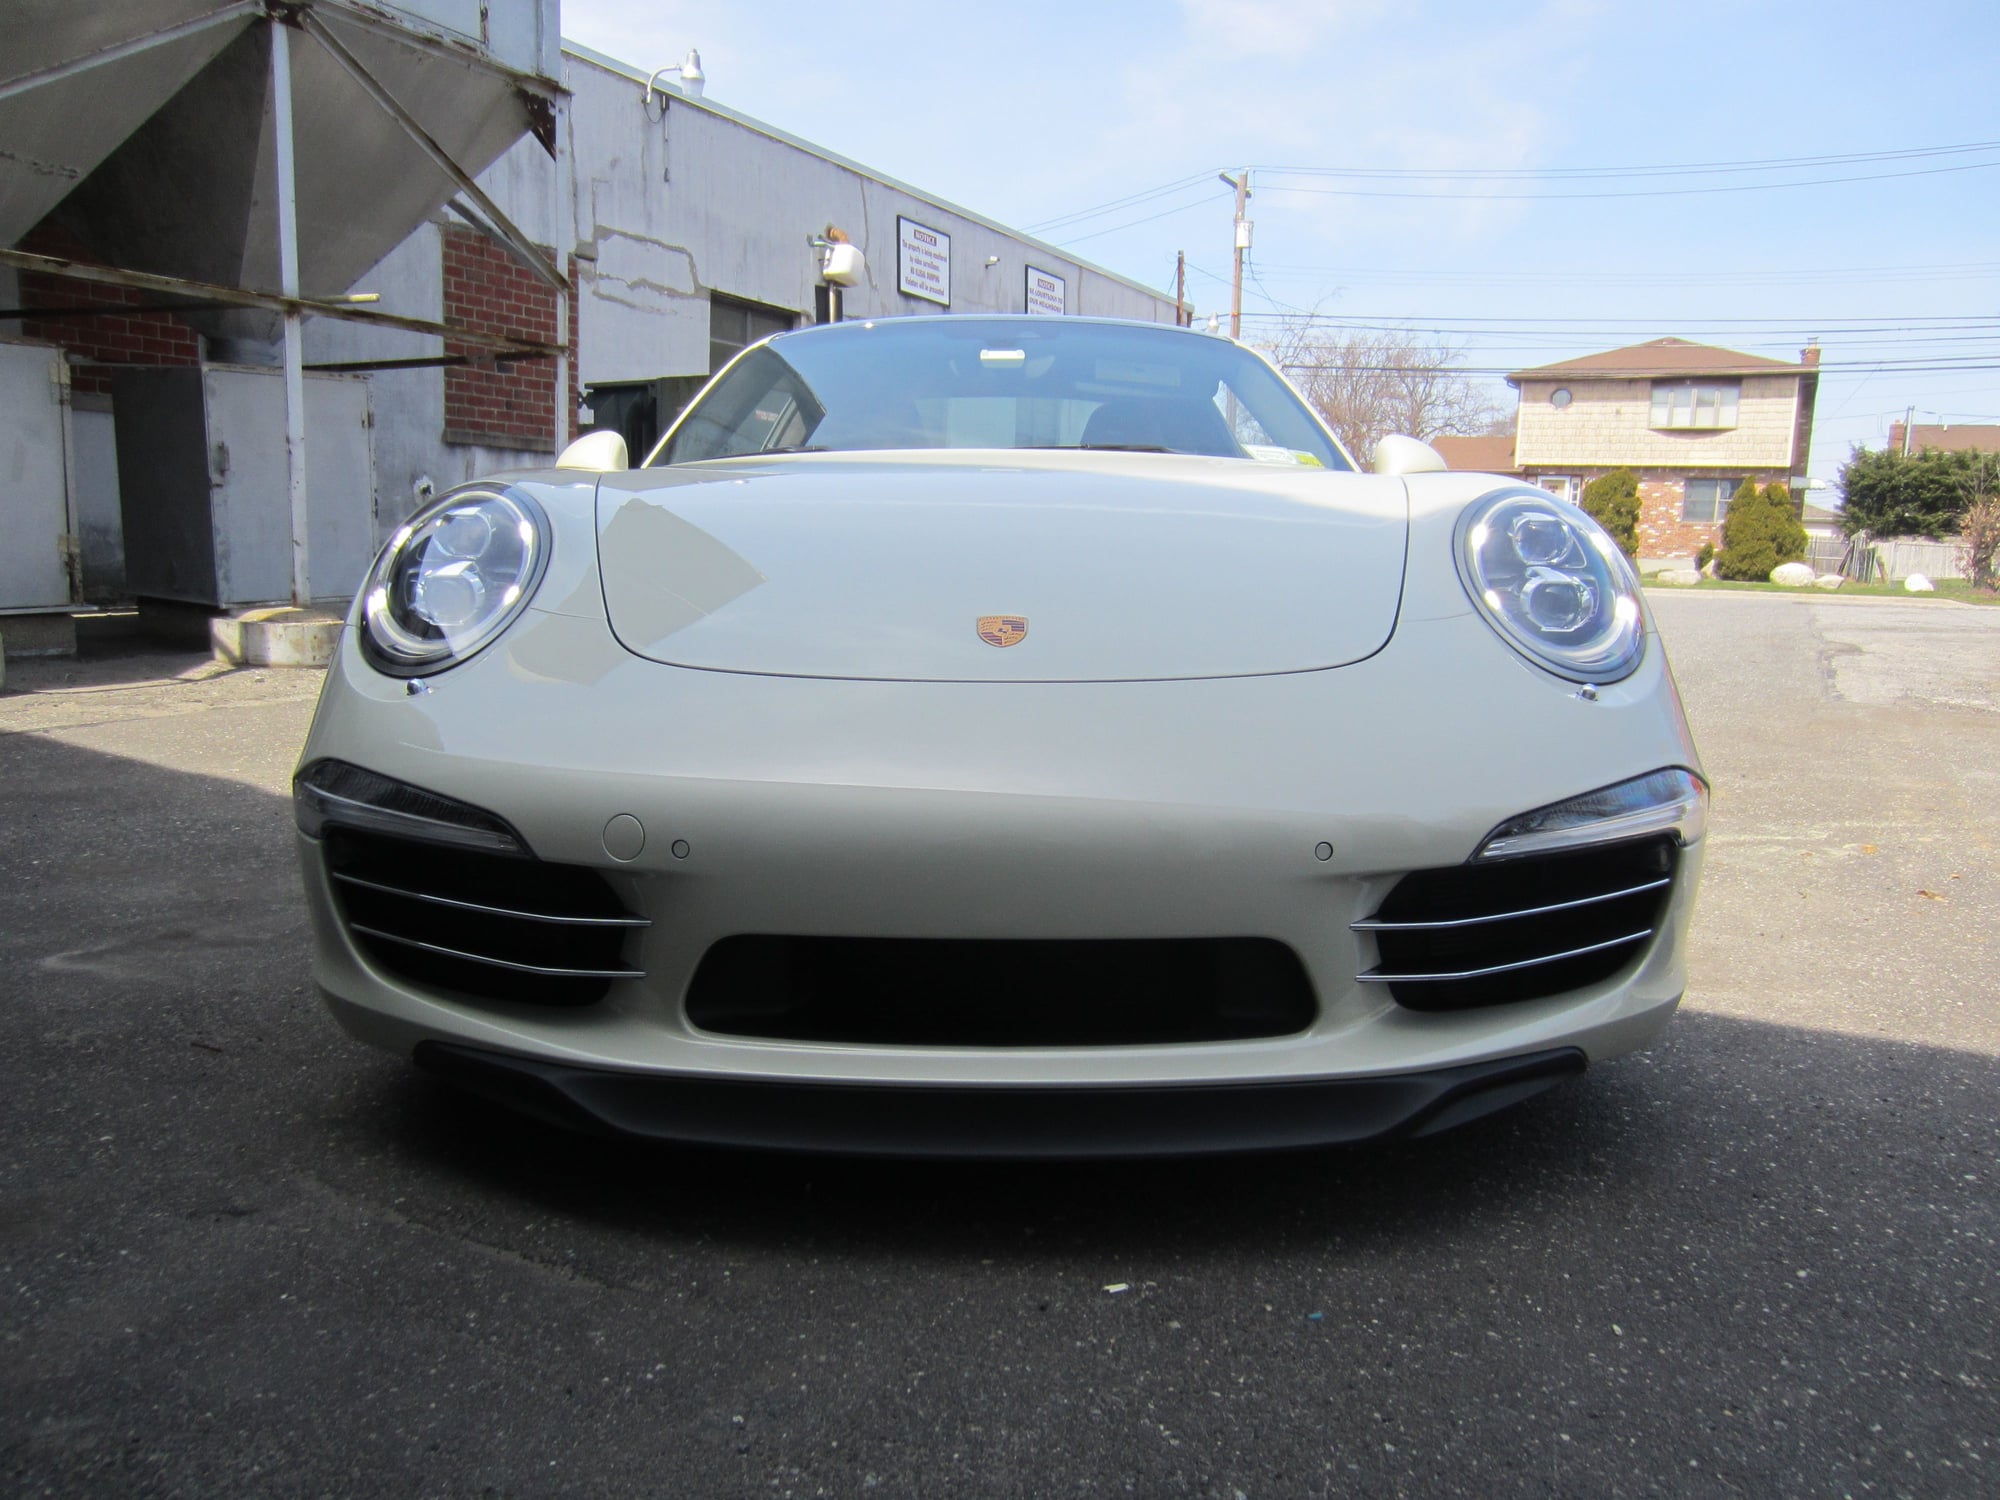 2014 Porsche 911 - 2014 Porsche 911 Carrera 50 - Used - VIN WP0ABA2A99ES12290 - 8,385 Miles - White - Great Neck, NY 11021, United States